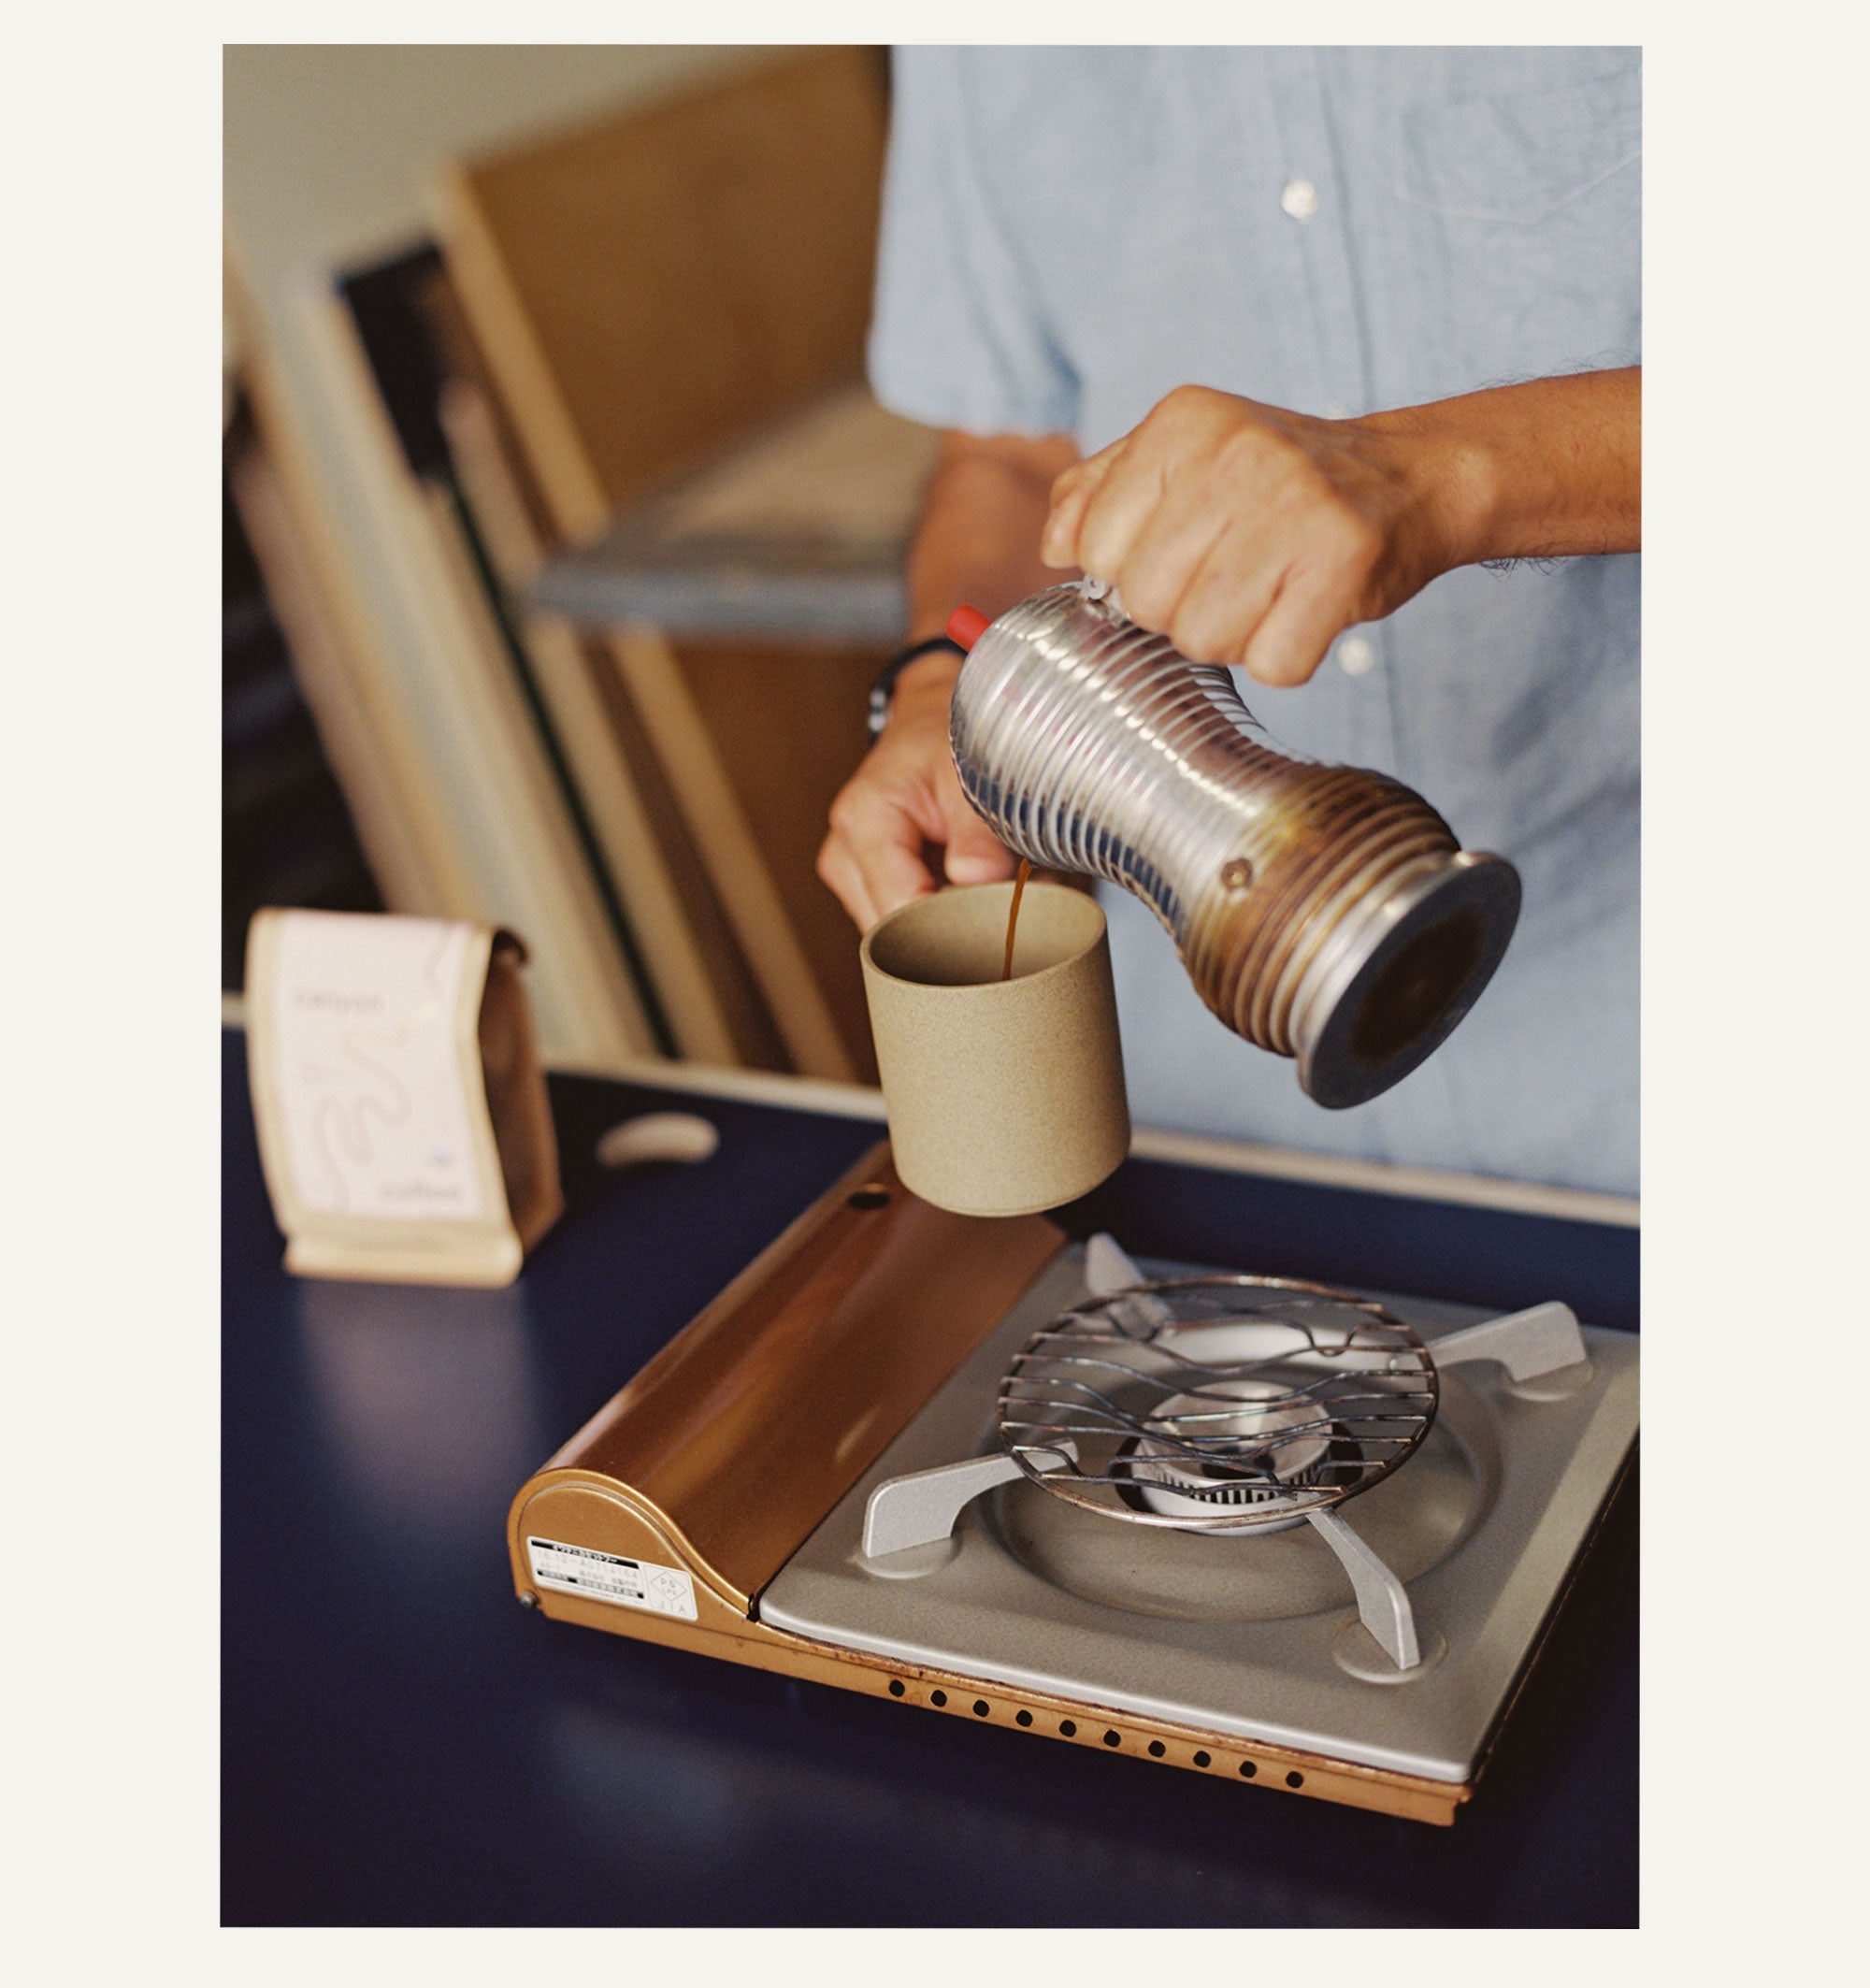 Canyon Coffee being made by Shin Okuda with a Moka Pot